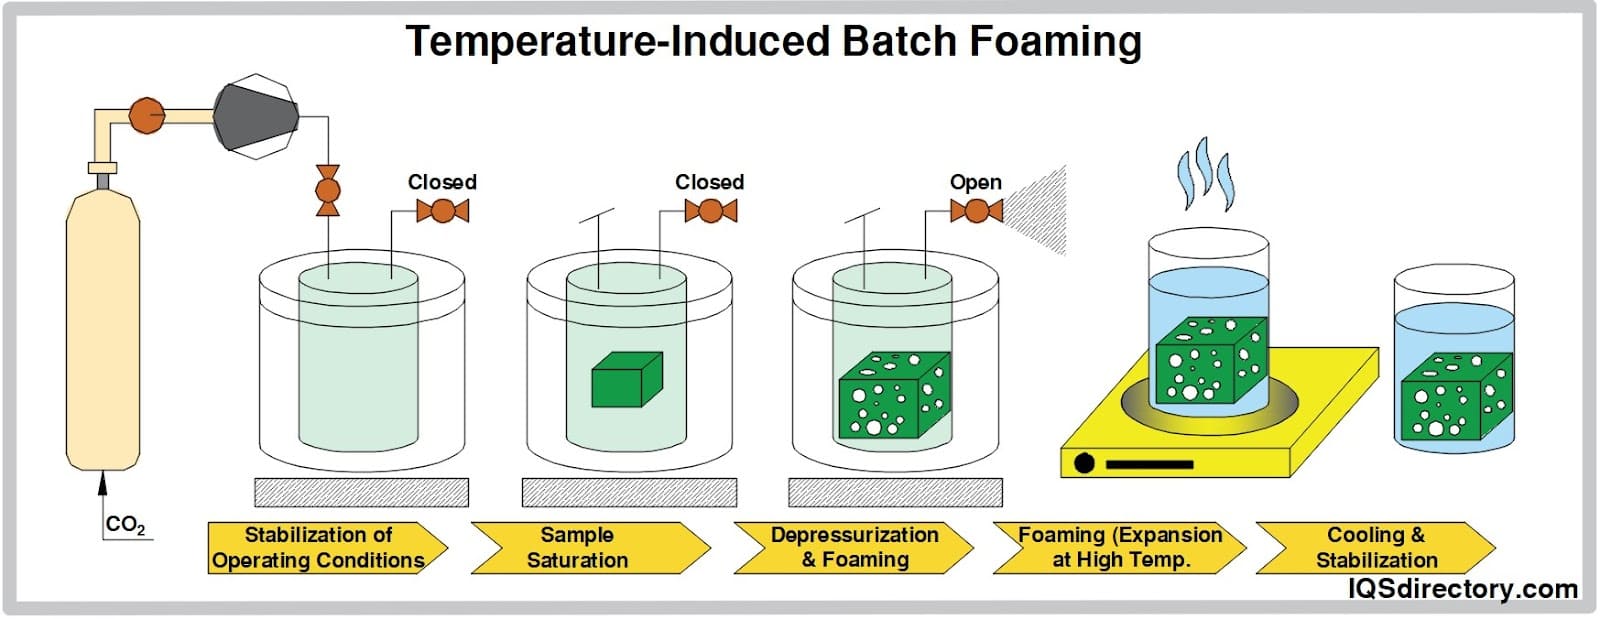 Temperature-Induced Batch Foaming